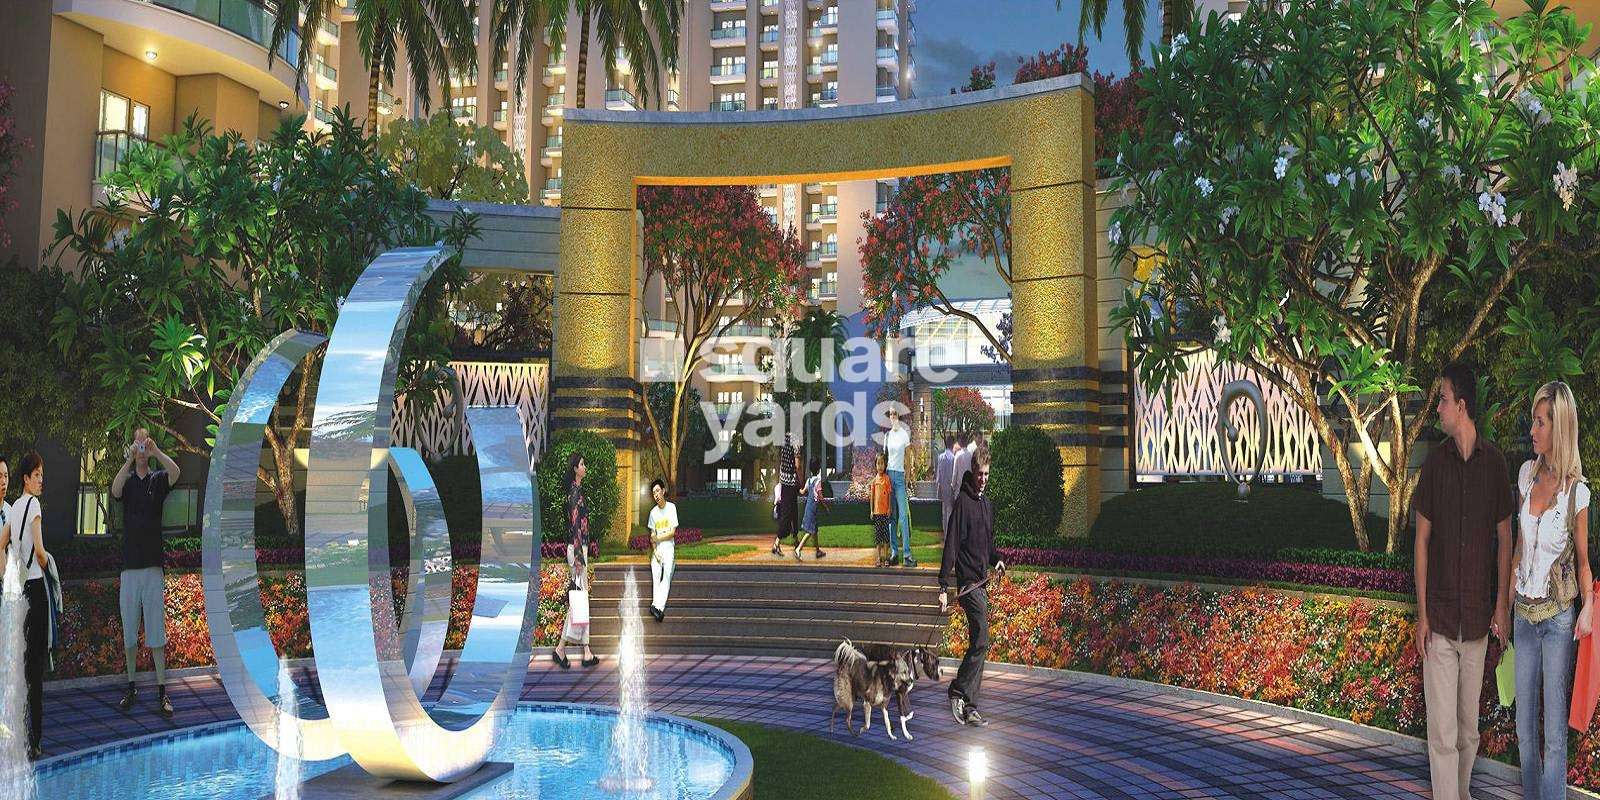 samridhi luxuriya avenue project amenities features1